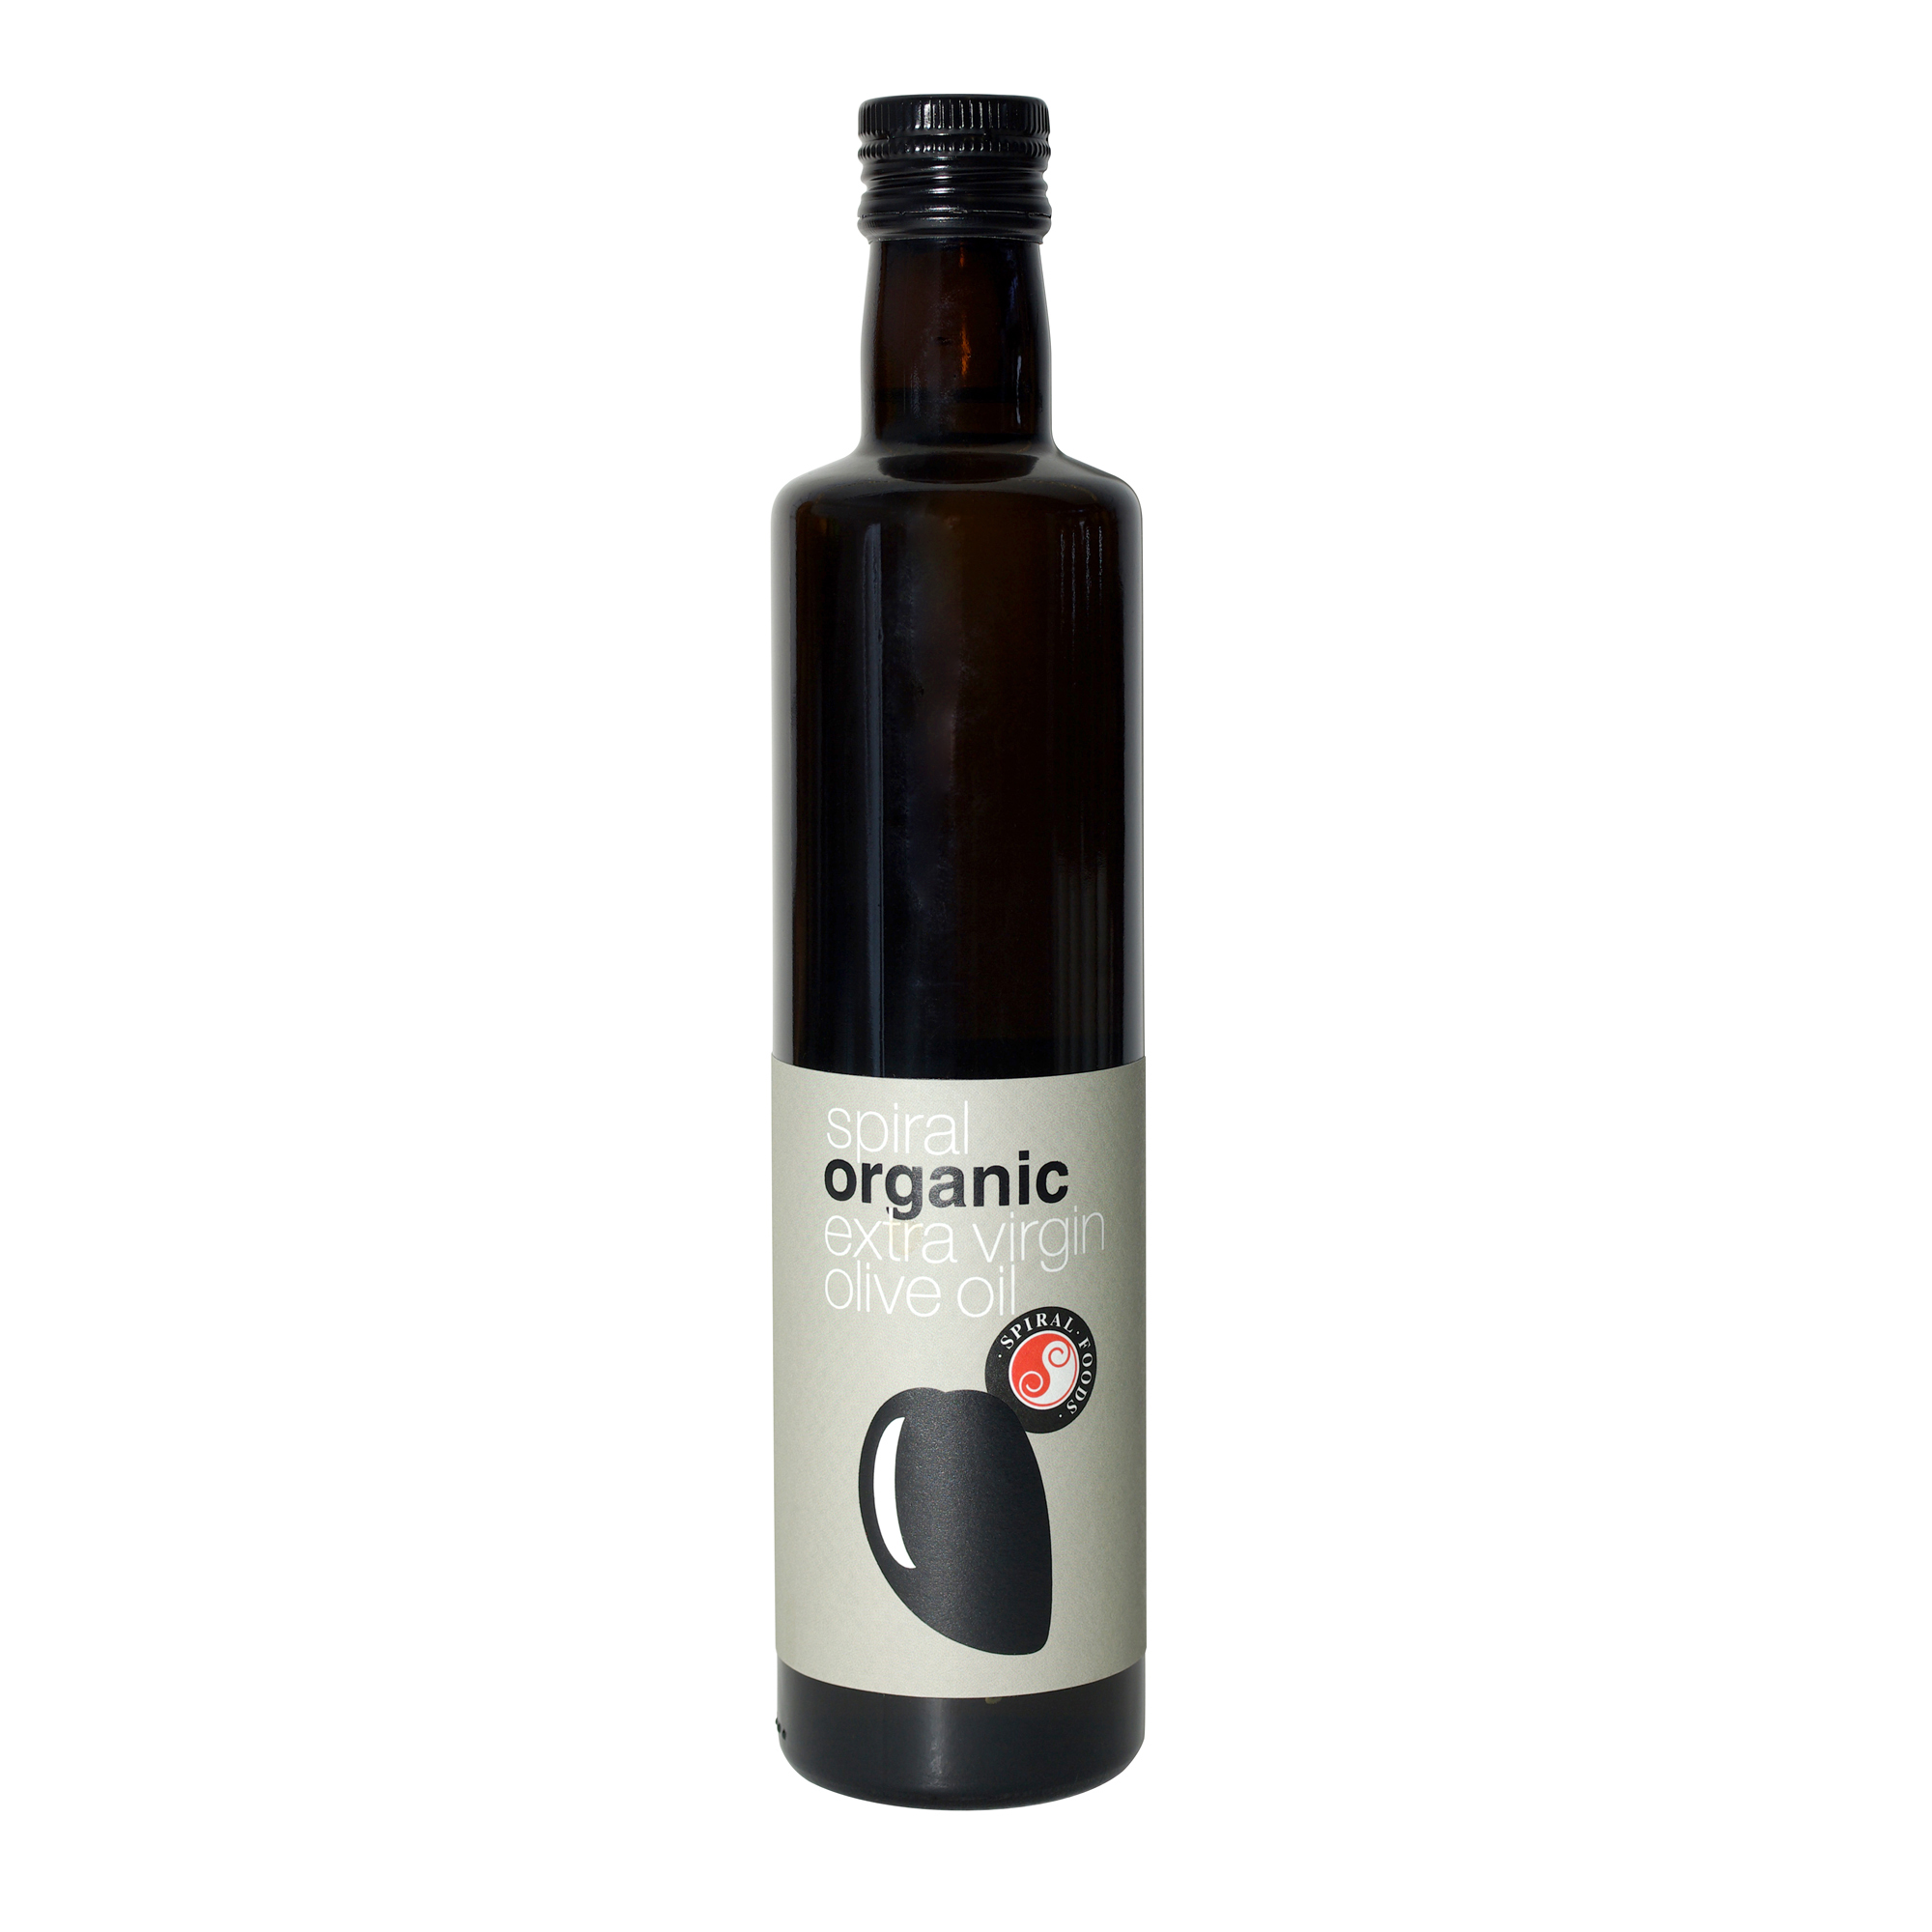 Spiral_olive Oil_Organic